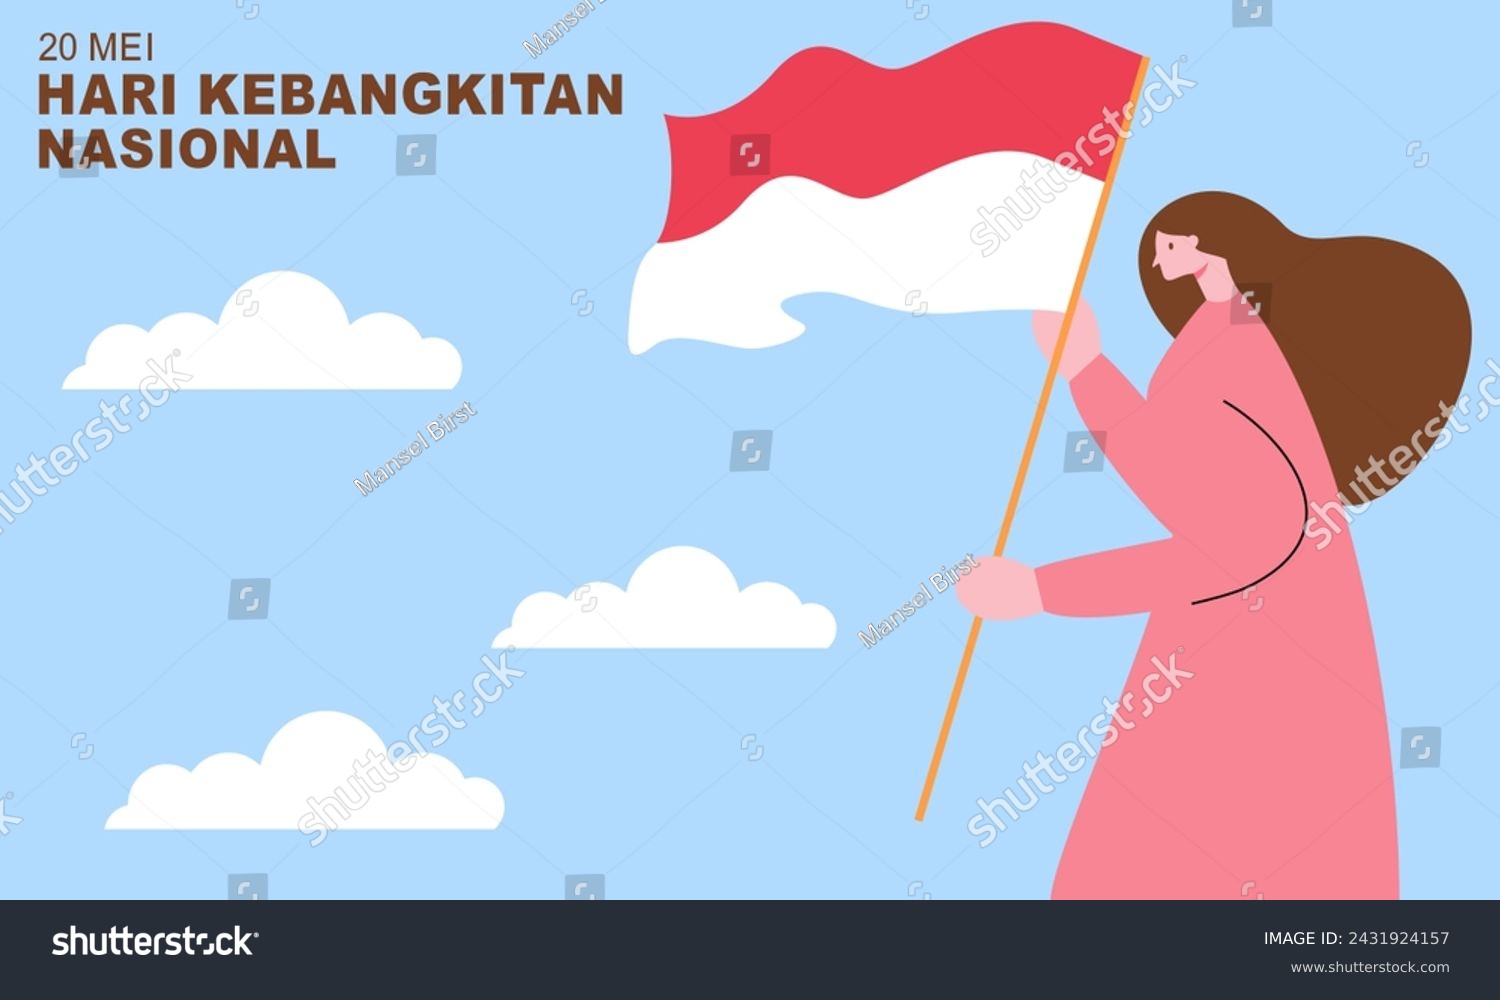 SVG of Hari Kebangkitan Nasional, 20 Mei. Translation : May 20, National Awakening Day of Indonesia svg